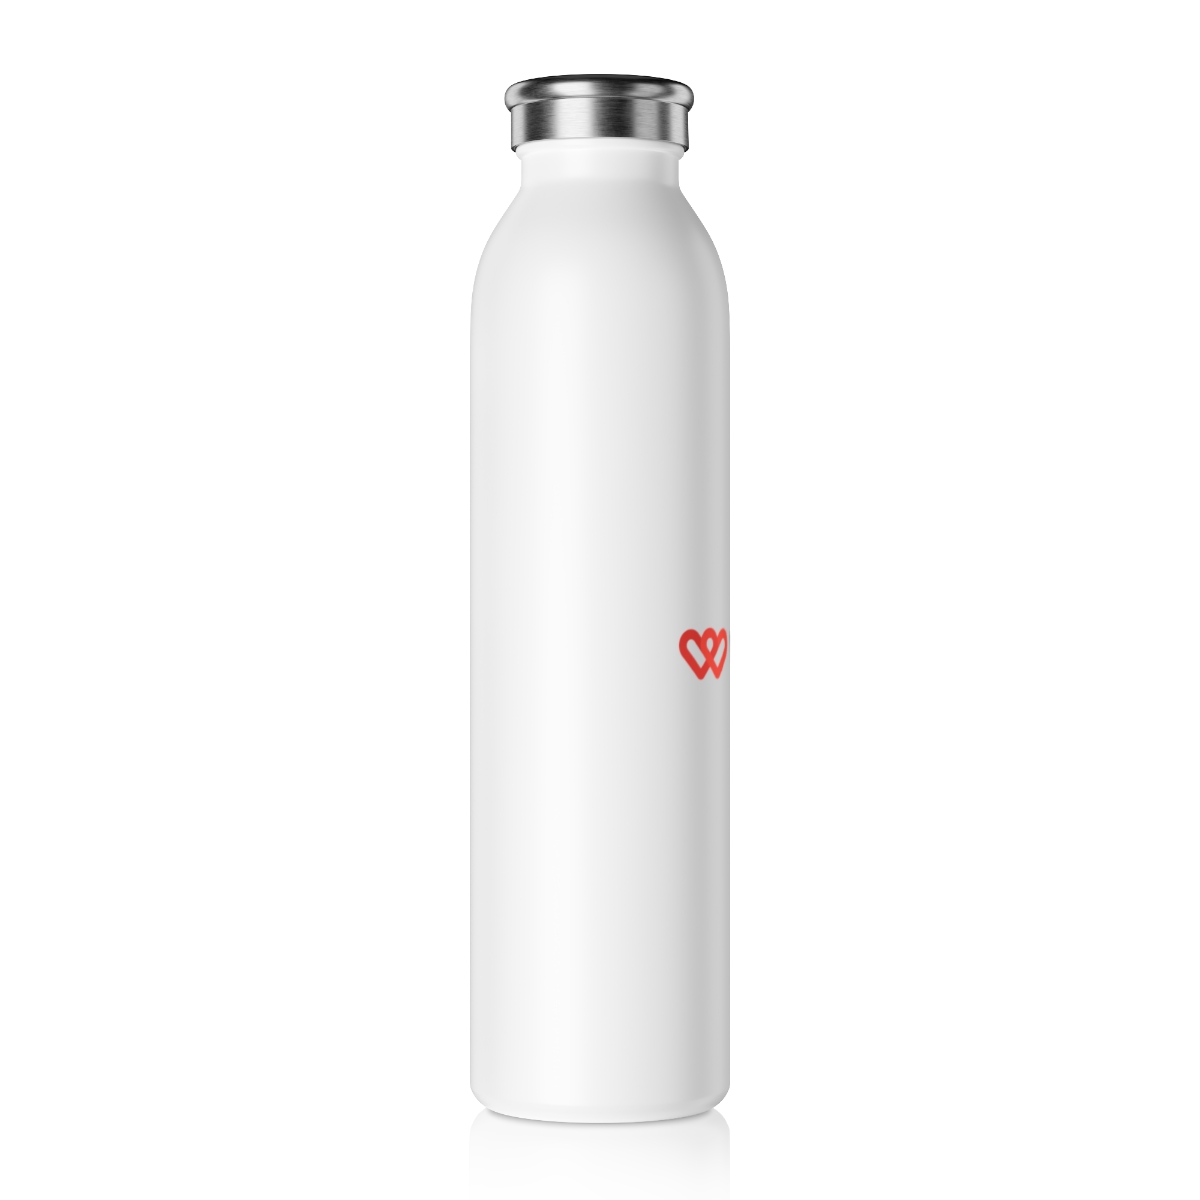 Slim Water Bottle product thumbnail image